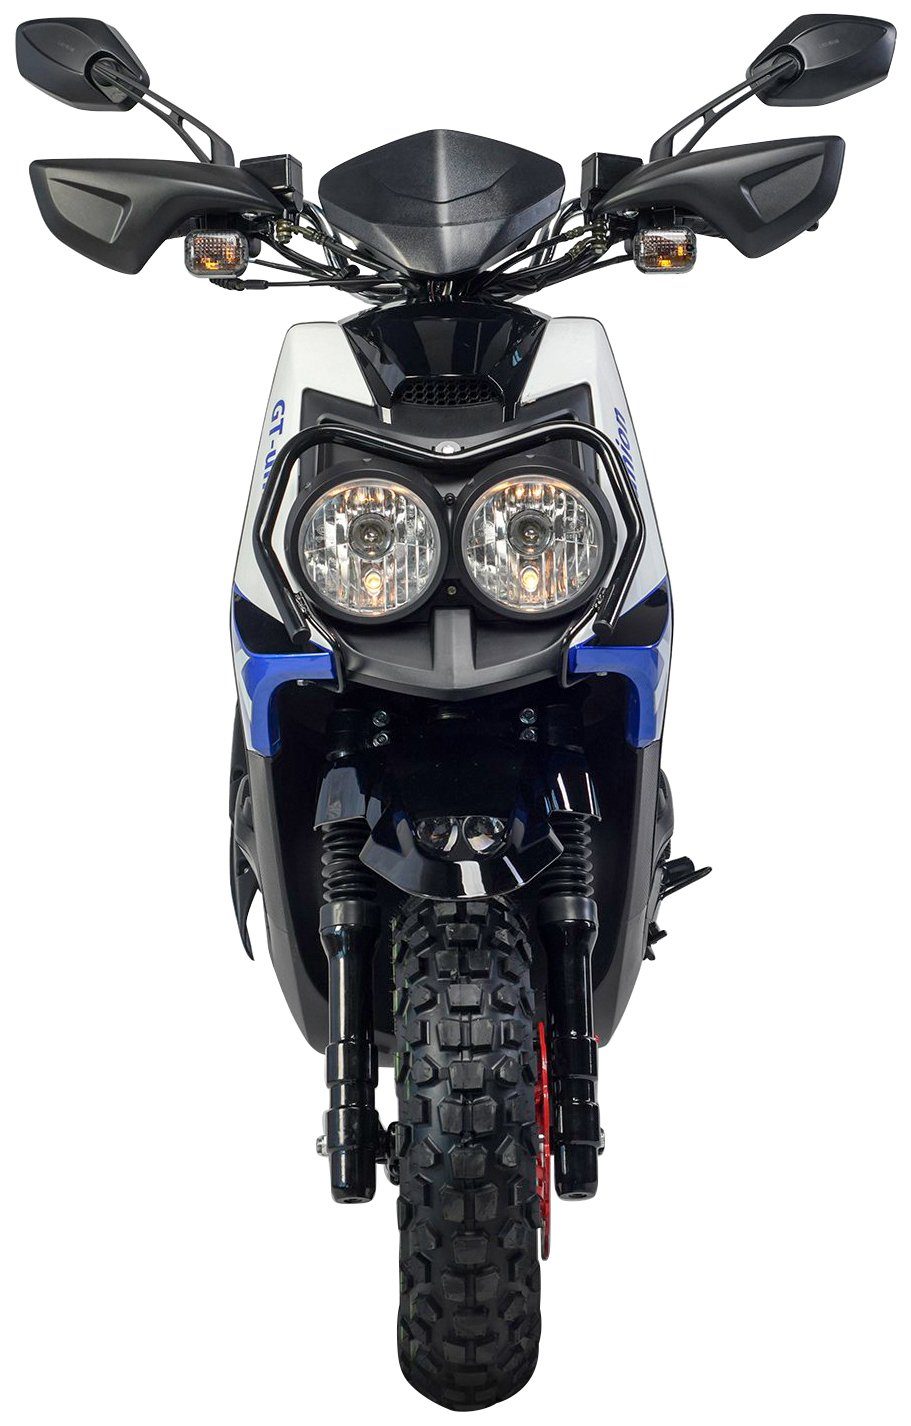 GT UNION Motorroller PX 55 125 weiß/blau/schwarz 5 Euro 85 Cross-Concept, ccm, km/h